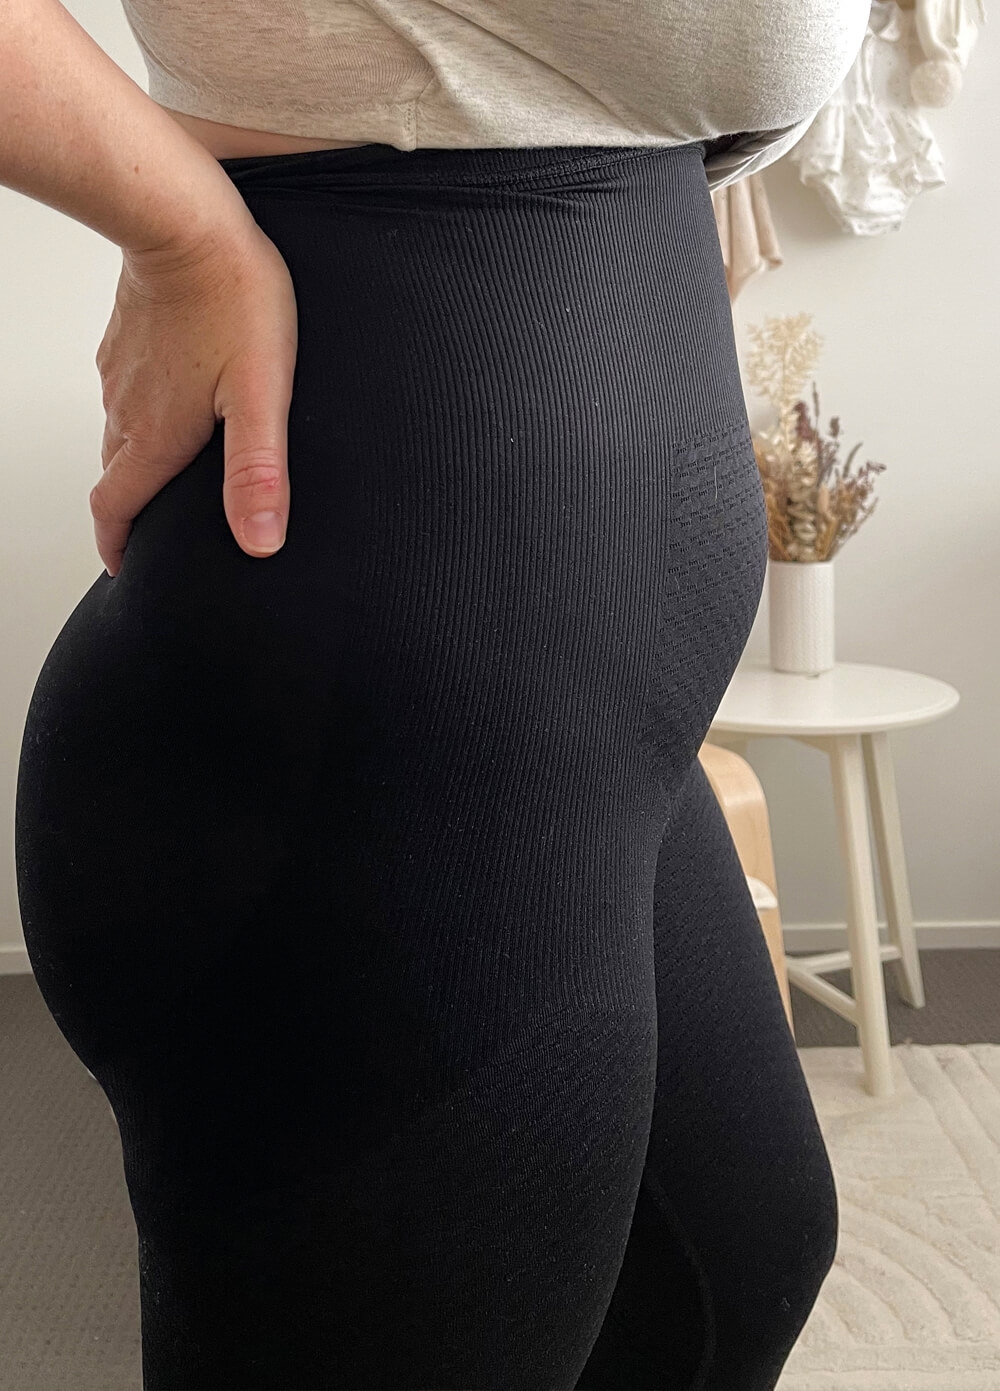 Queen Bee - High Waist Postpartum Recovery Leggings in Black